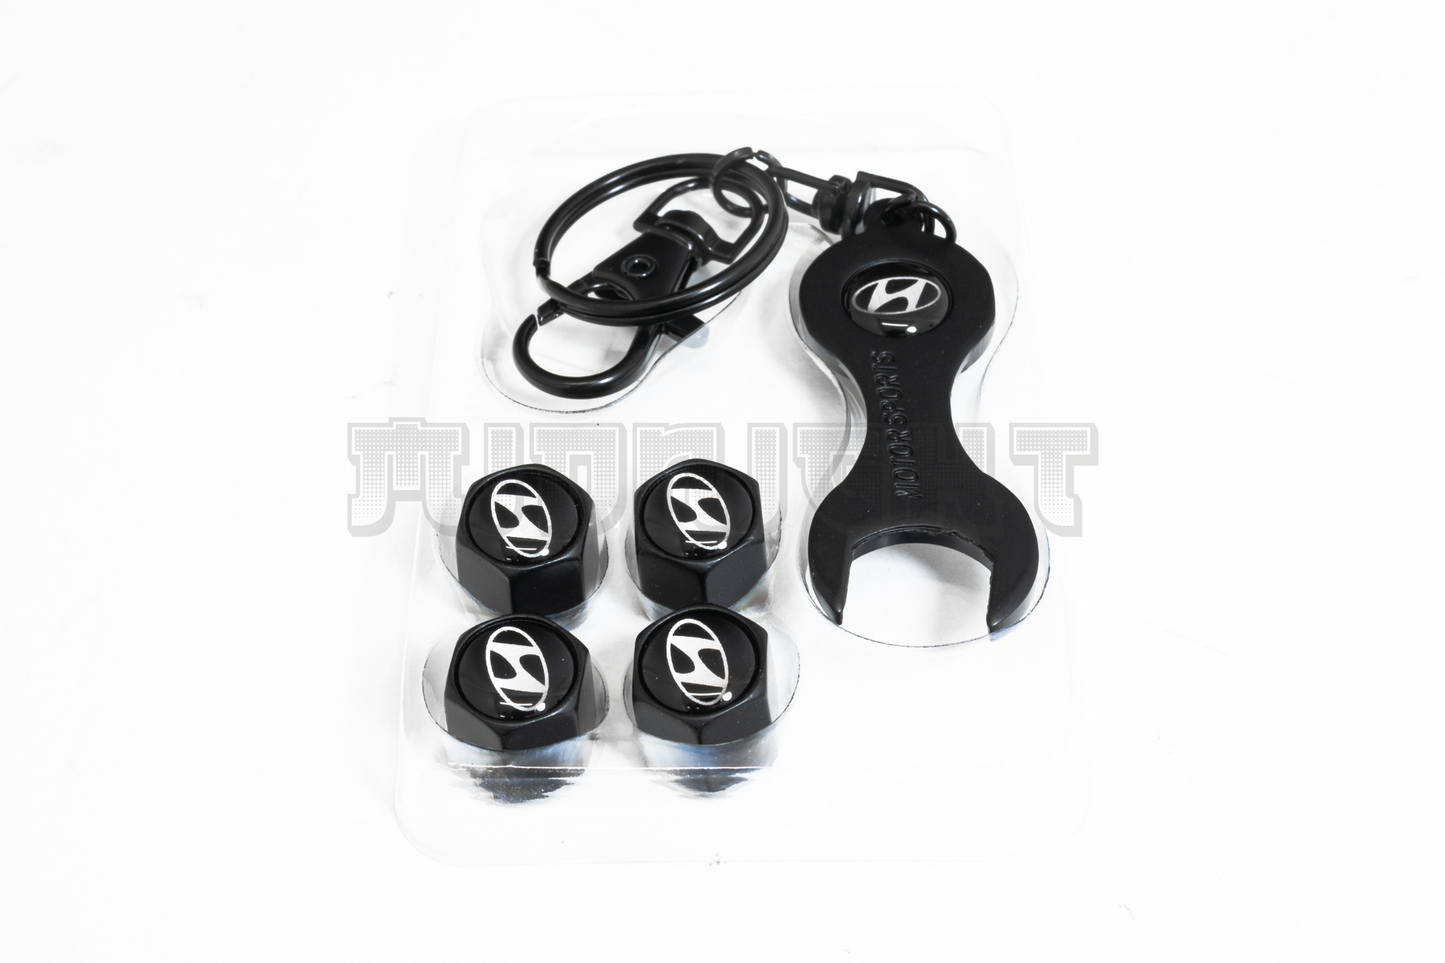 Hyundai Valve Stem Caps With Wrench Keychain